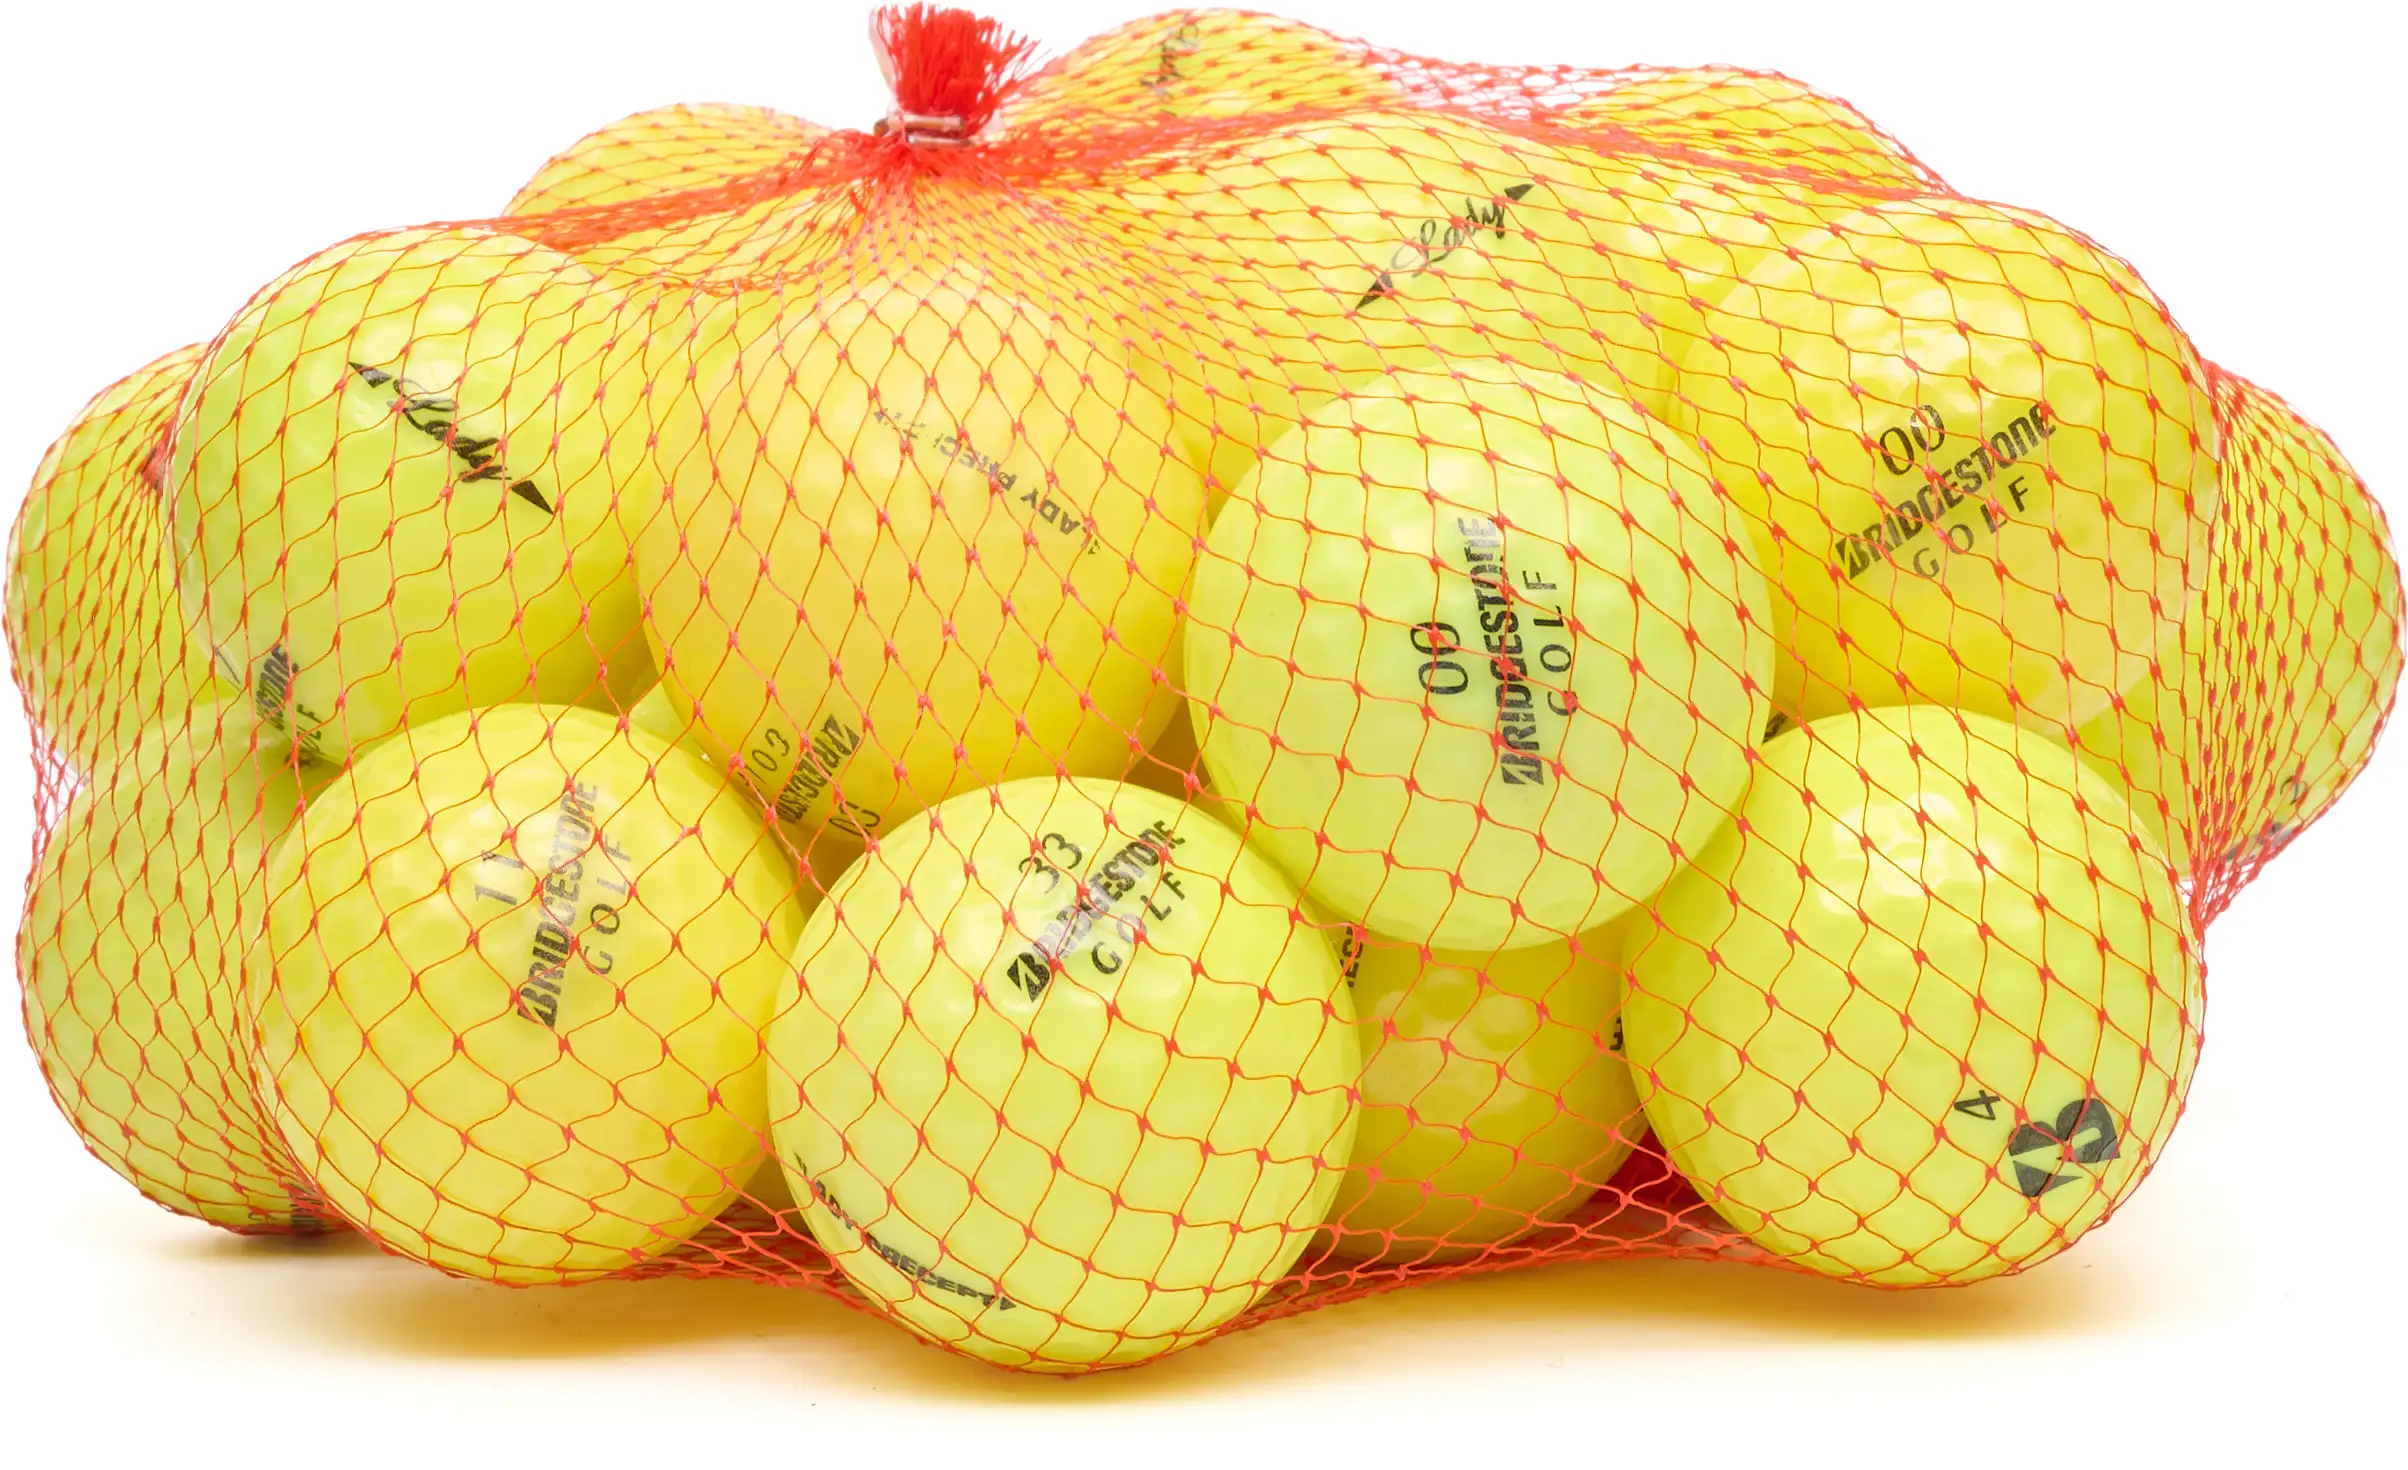 25 Bridgestone Lady Precept Lakeballs, yellow